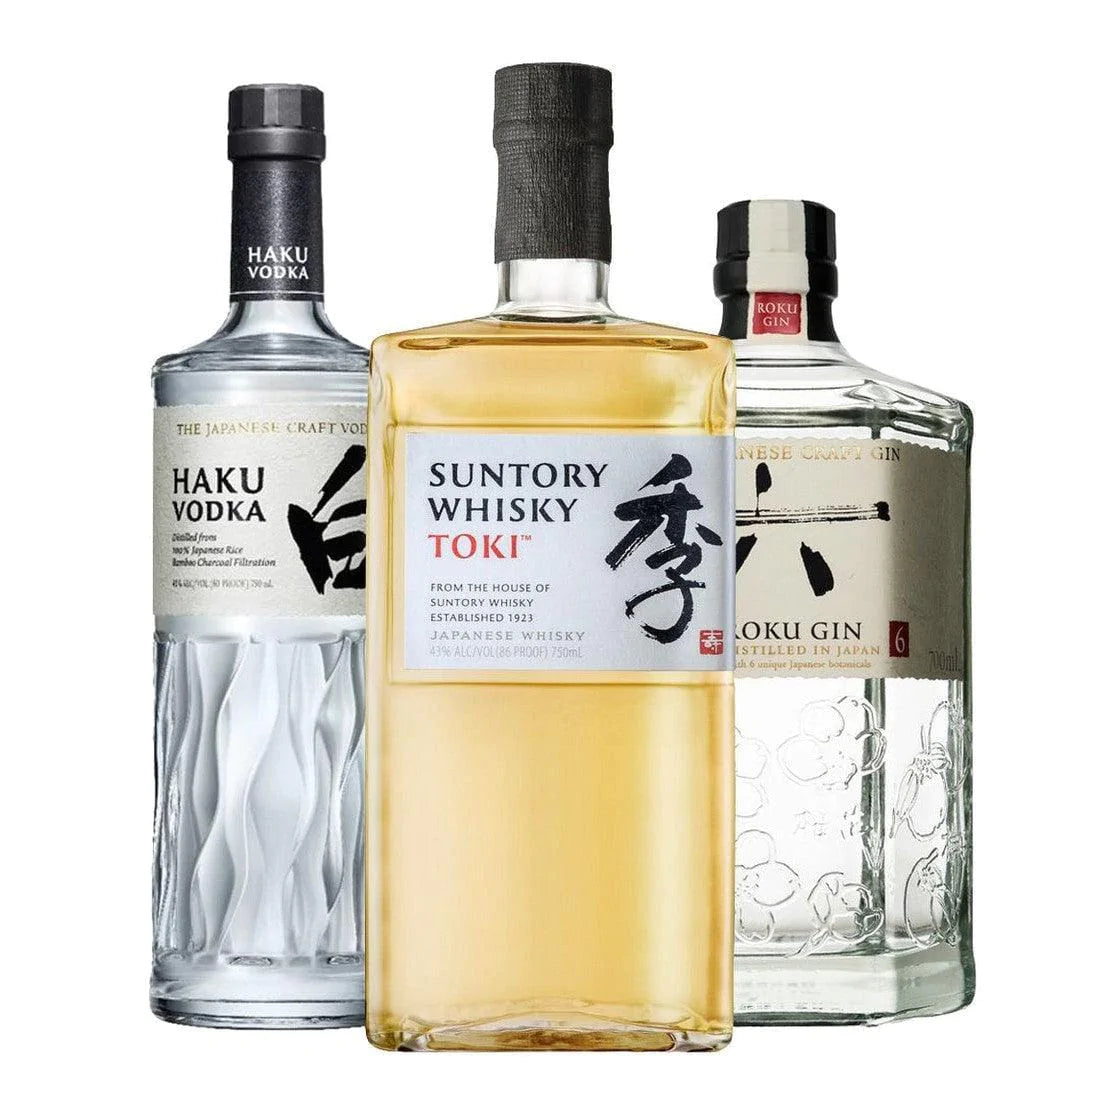 Suntory Whisky Toki With Haku Vodka And Roku Gin